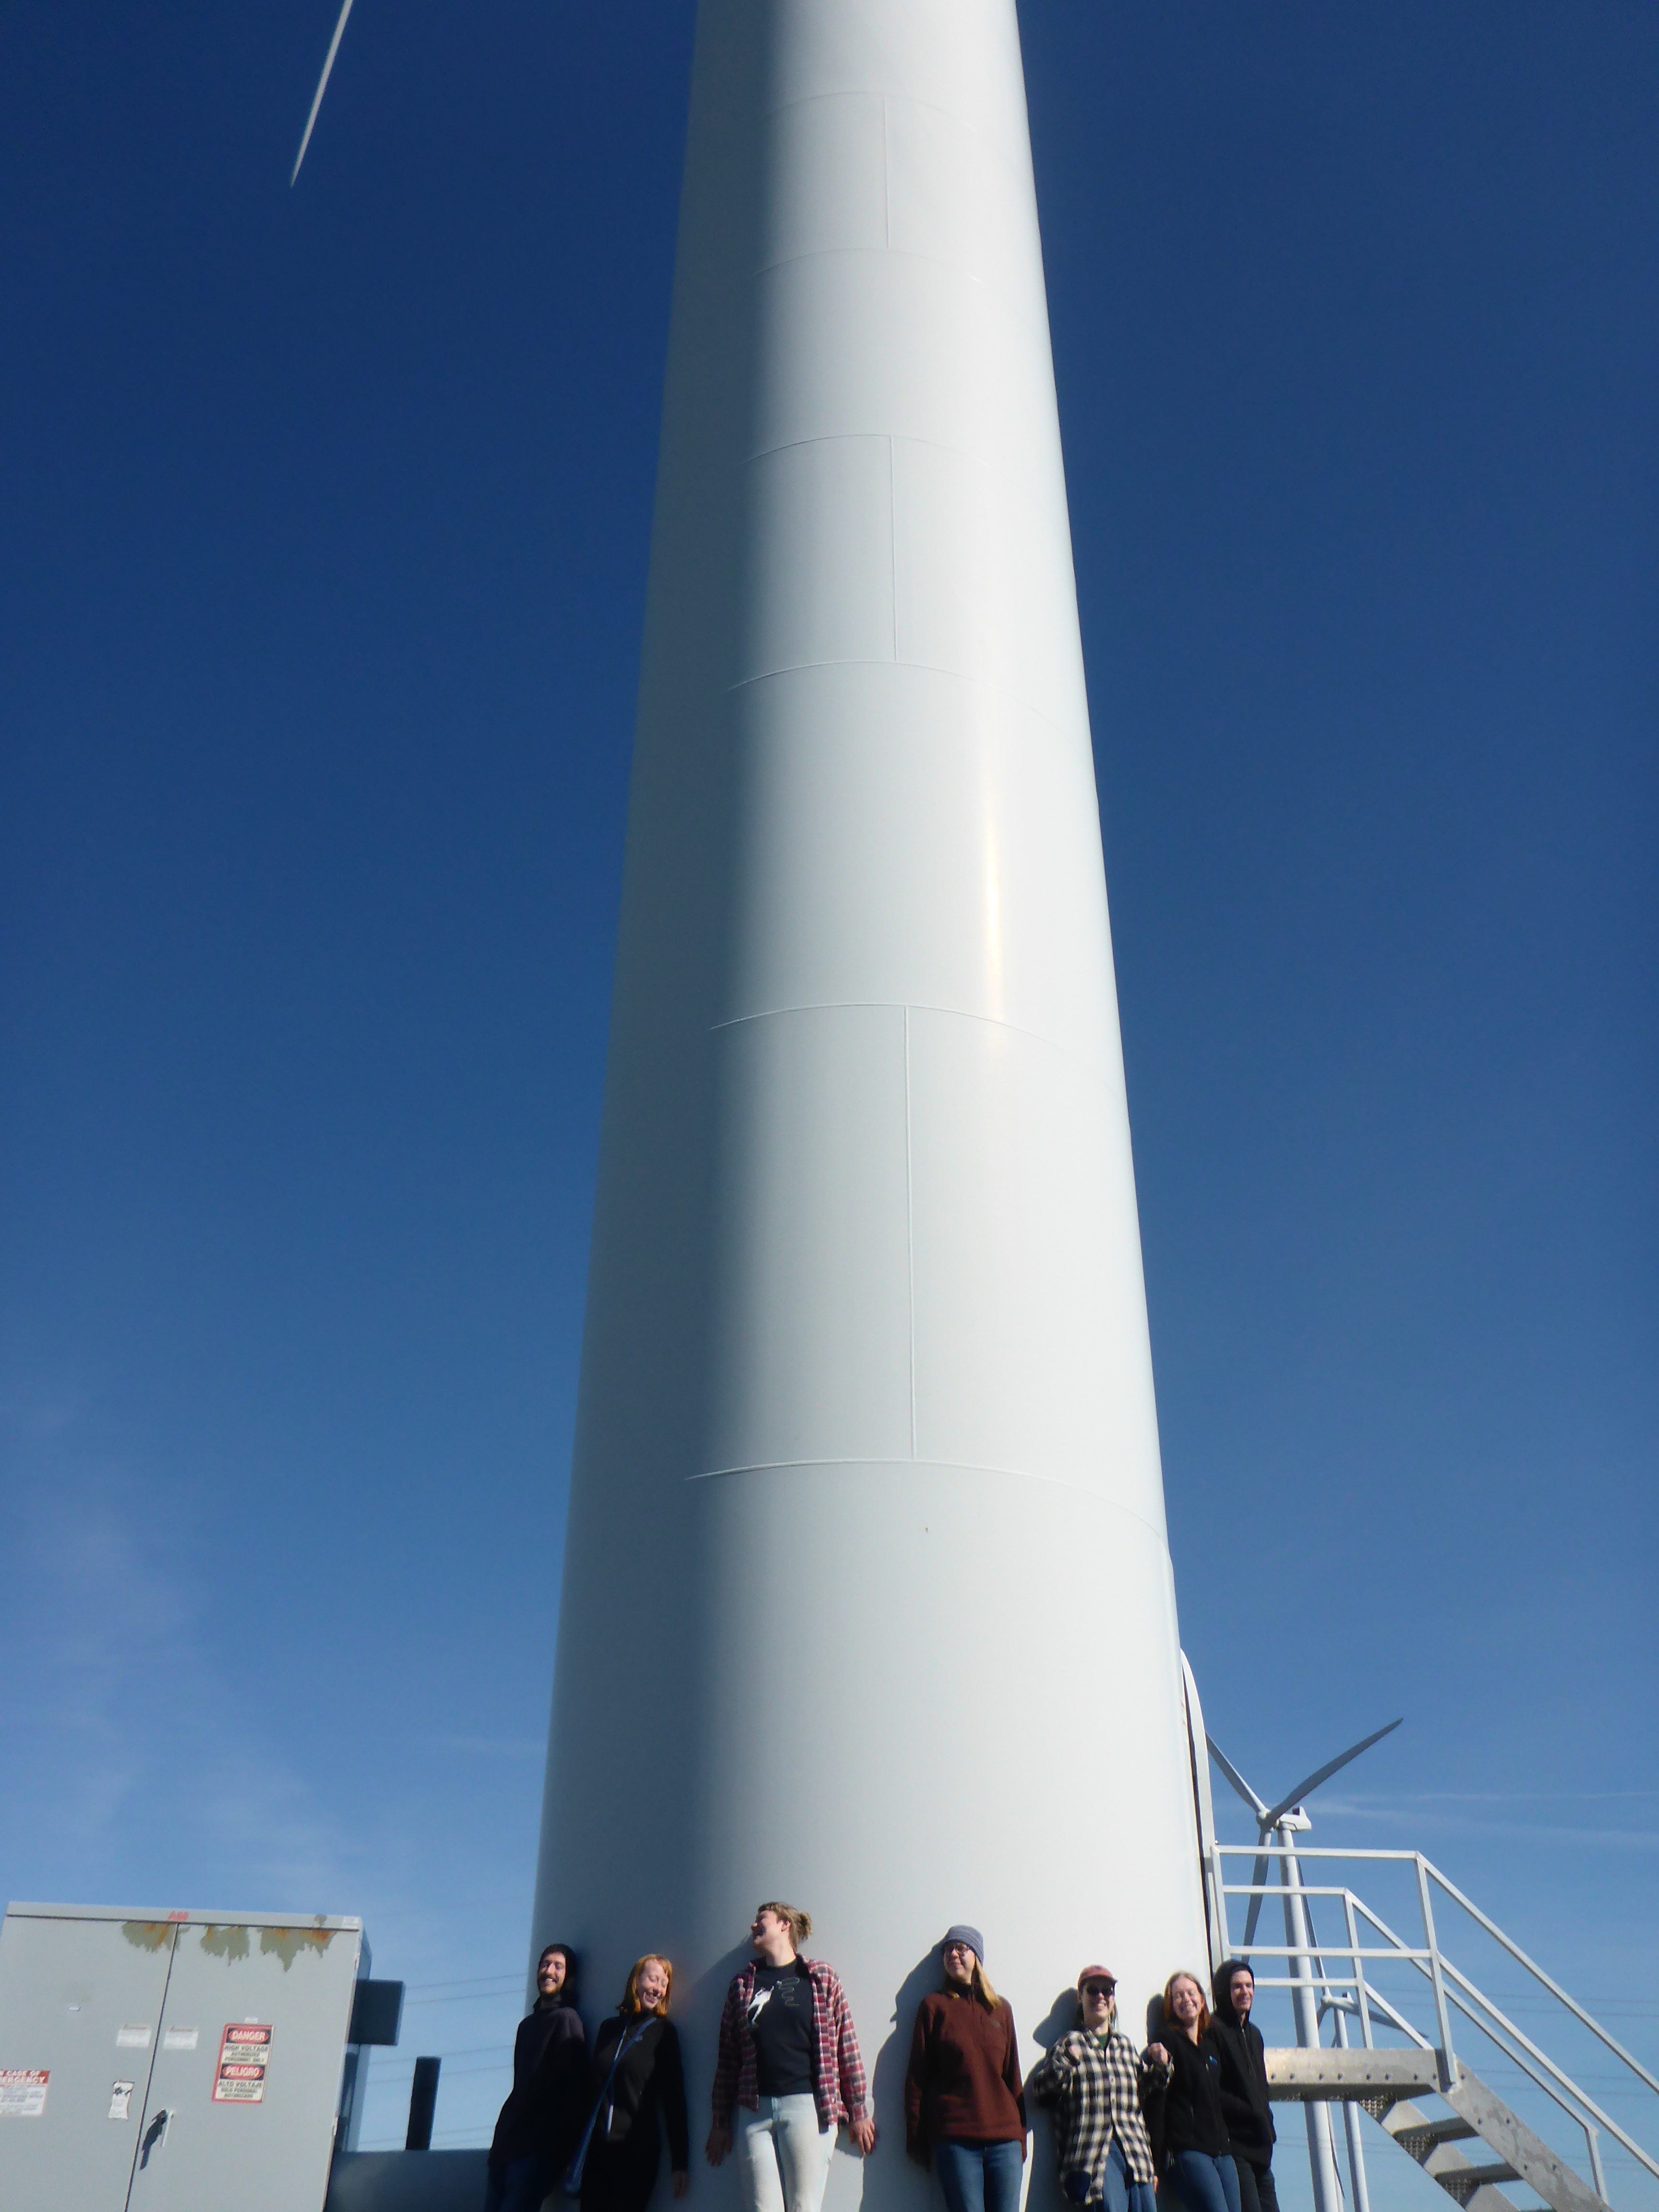 2017 fieldtrip to the Boardman powerplant and wind energy farms.